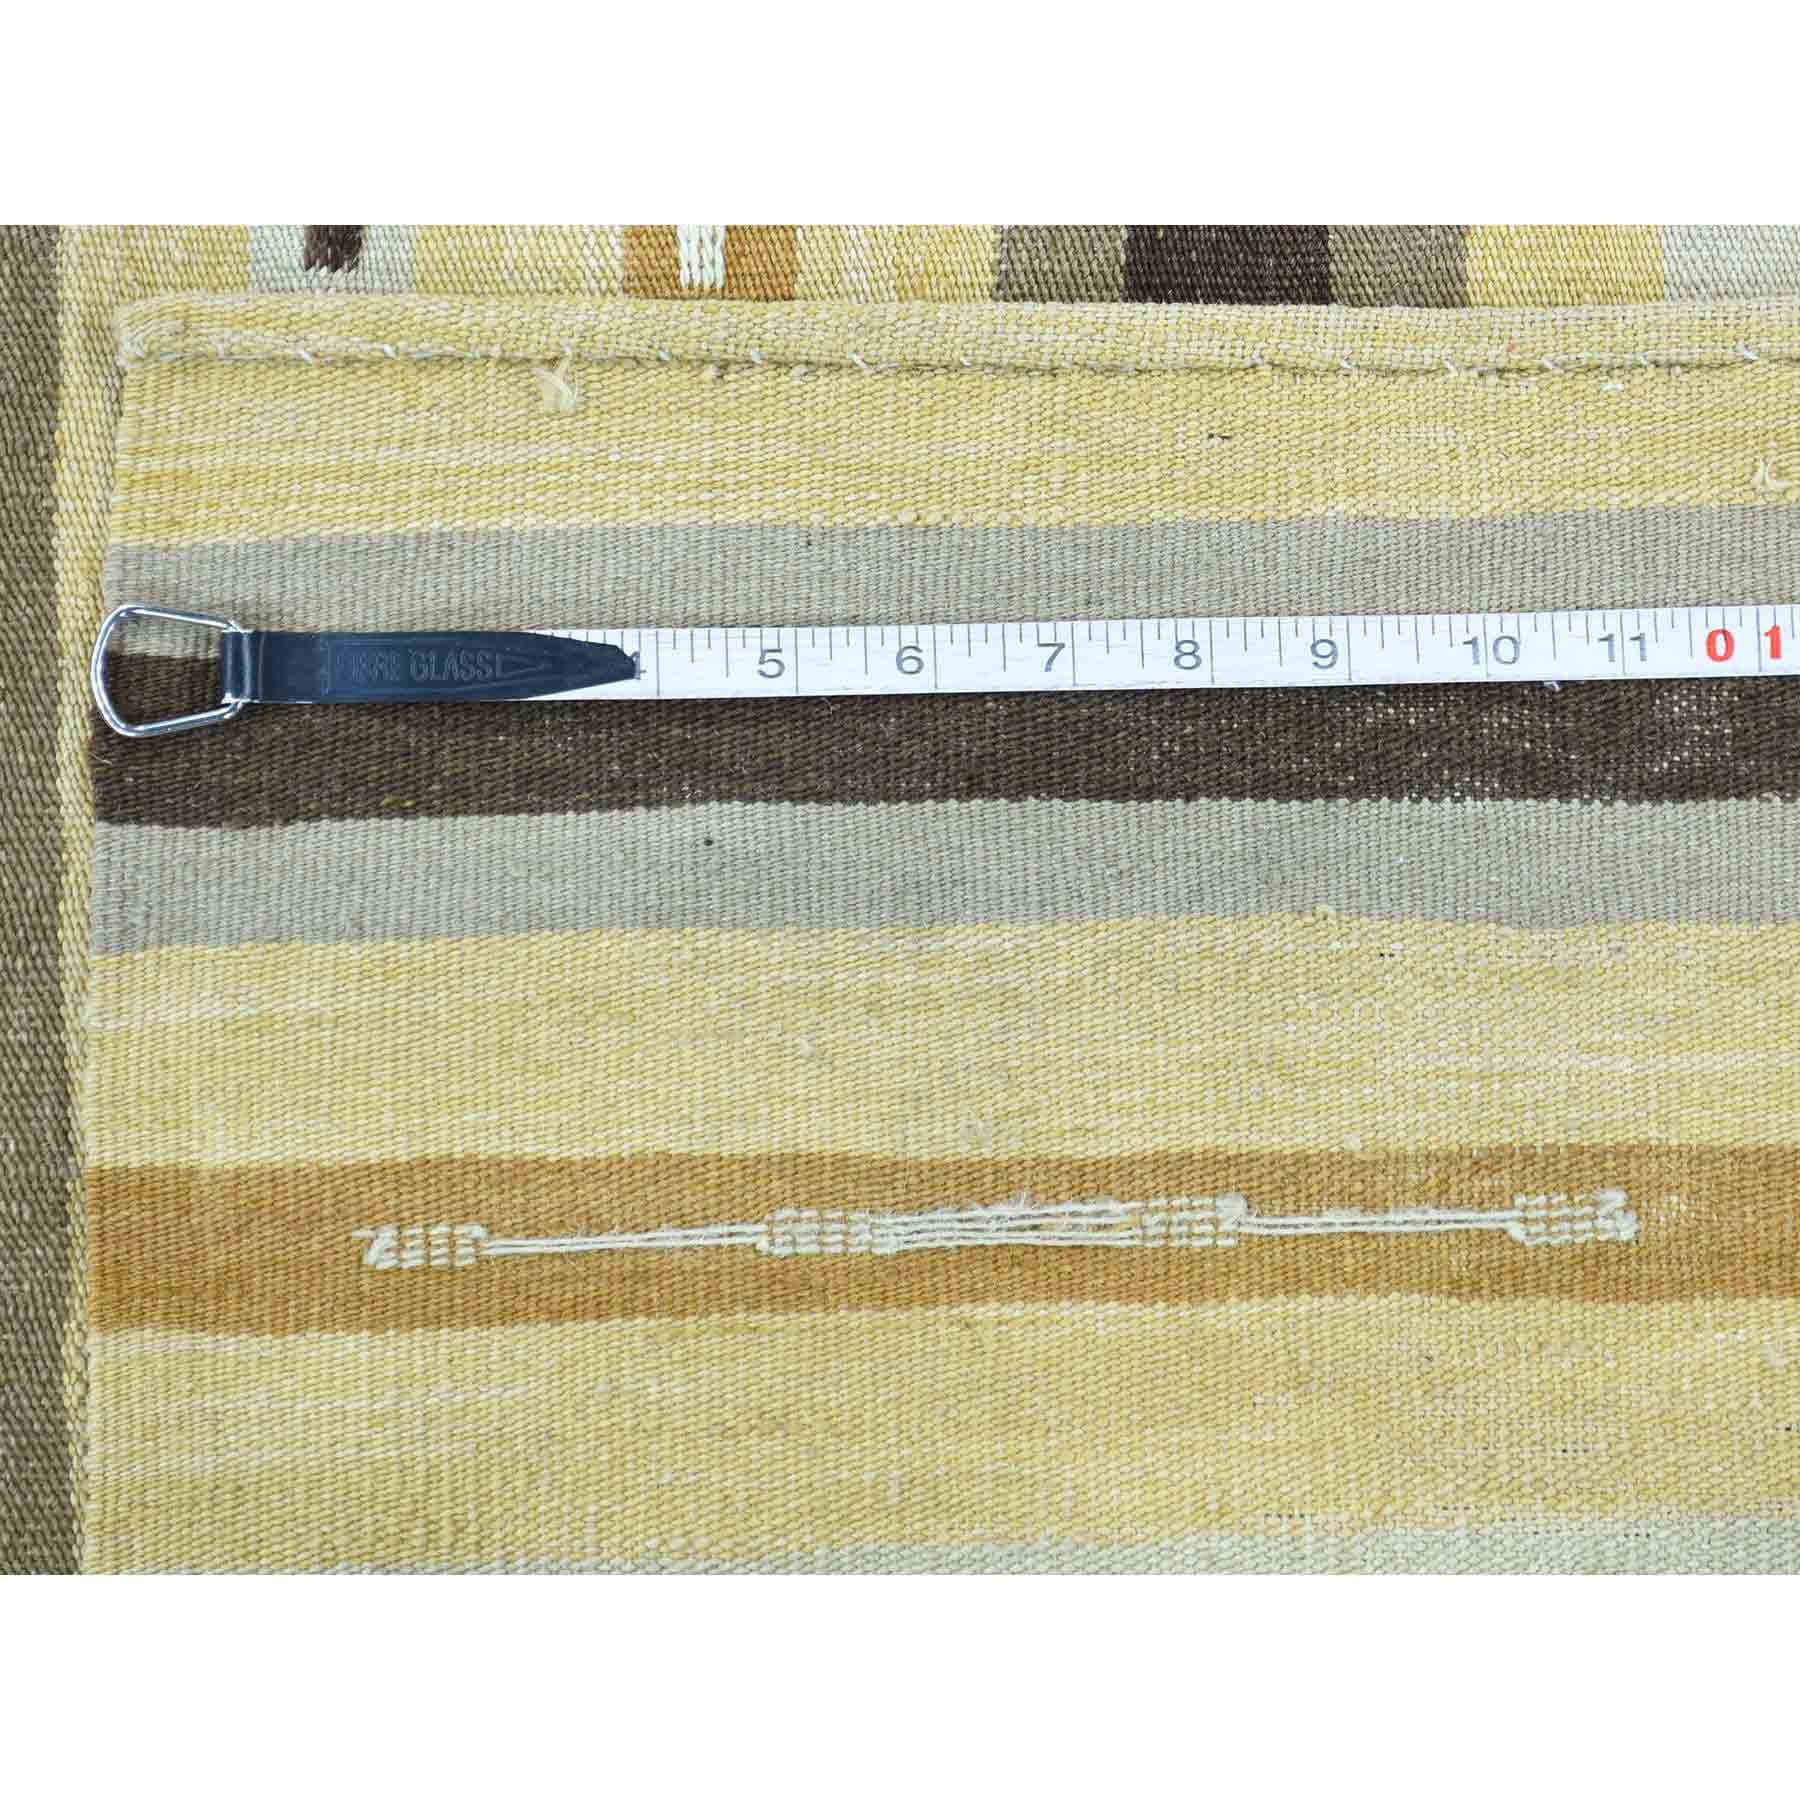 Flat-Weave-Hand-Woven-Rug-159290